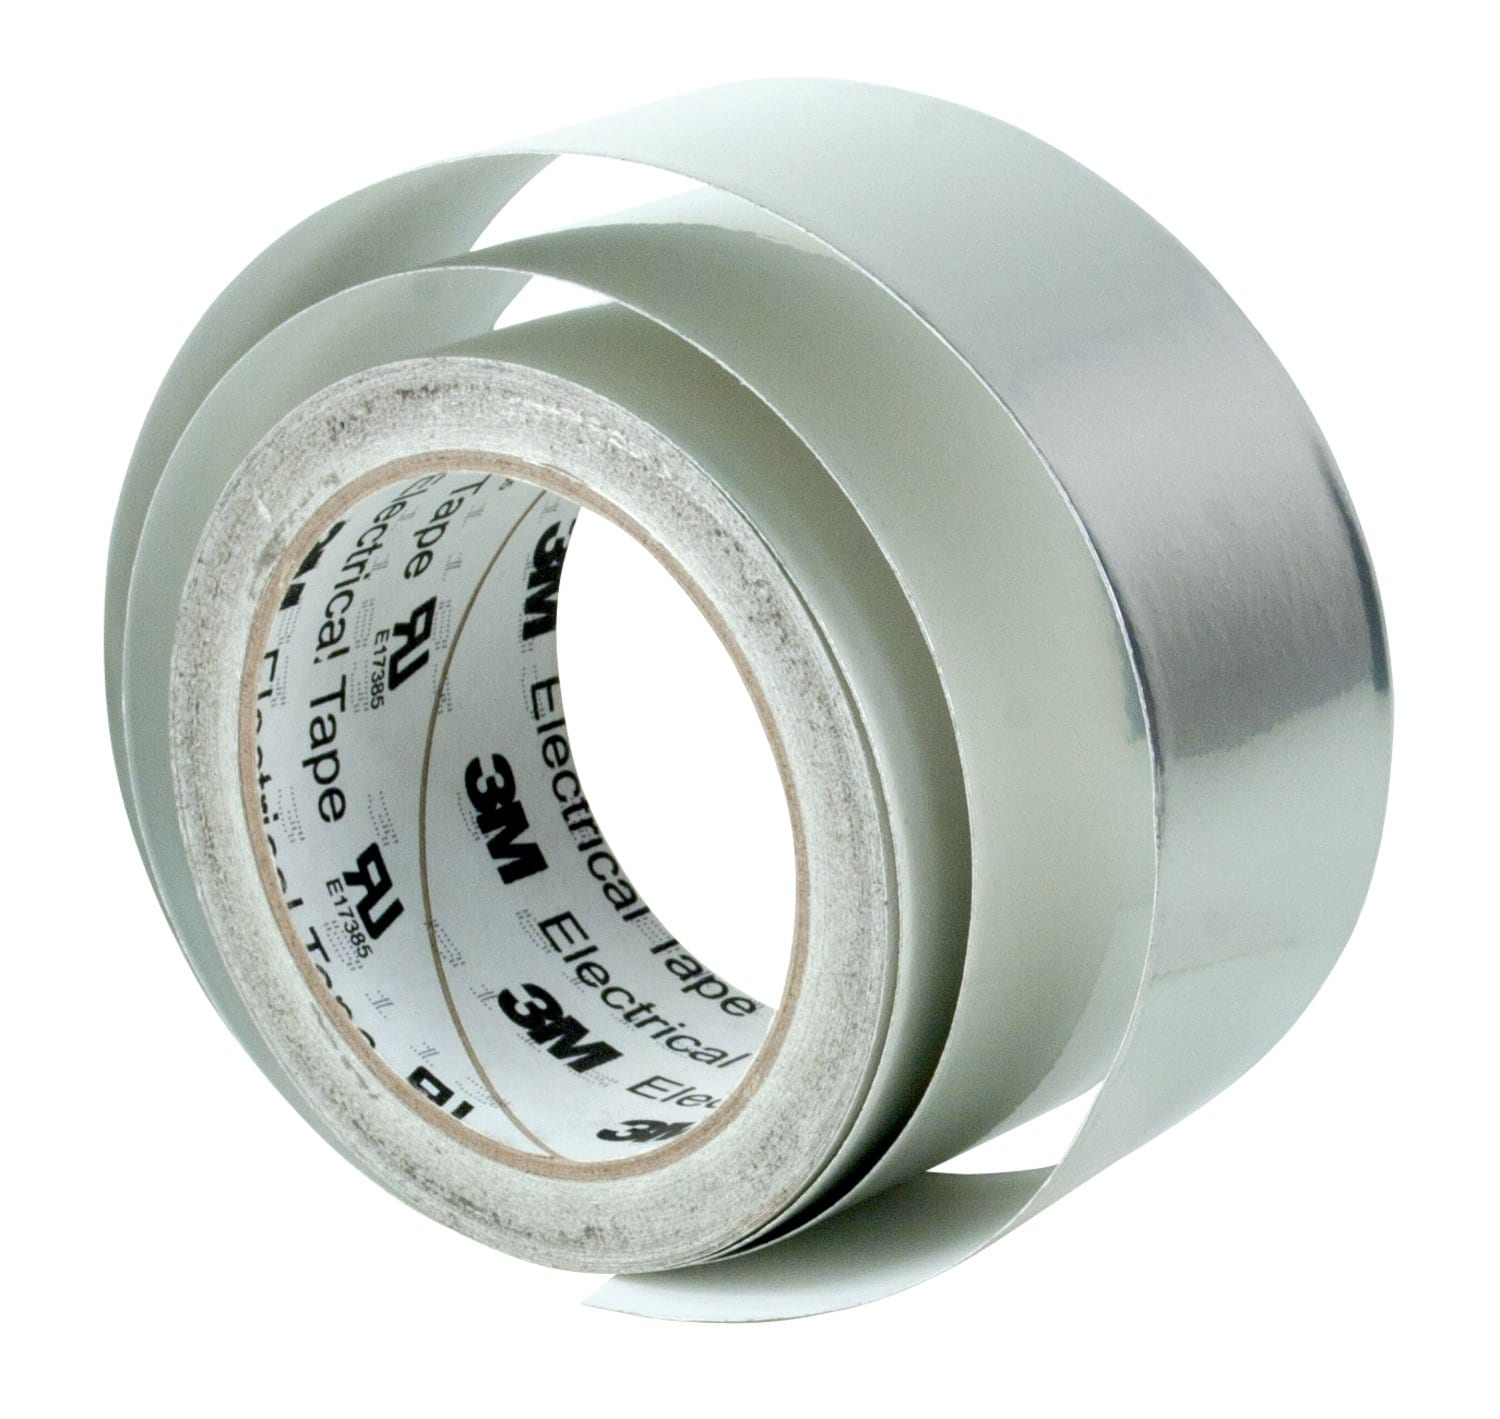 7010410124 - 3M Tin-Plated Copper Foil EMI Shielding Tape 1183, 23 in x 72 yd, Log
Roll w/ Splices Trimmed, 1 Roll/Case